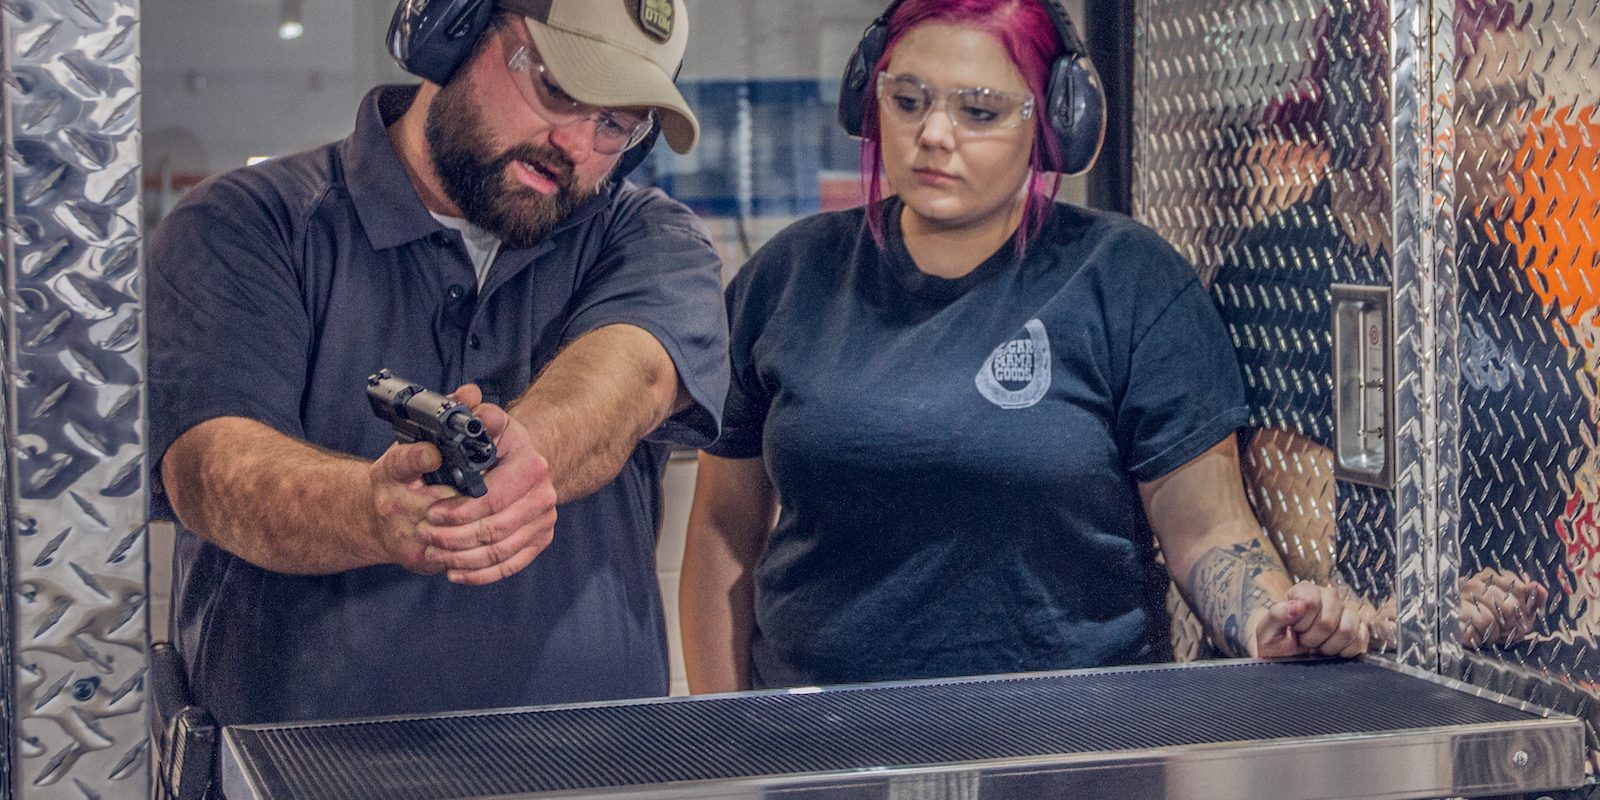 Shoot a Semi-Automatic Pistol at Las Vegas Shooting Center